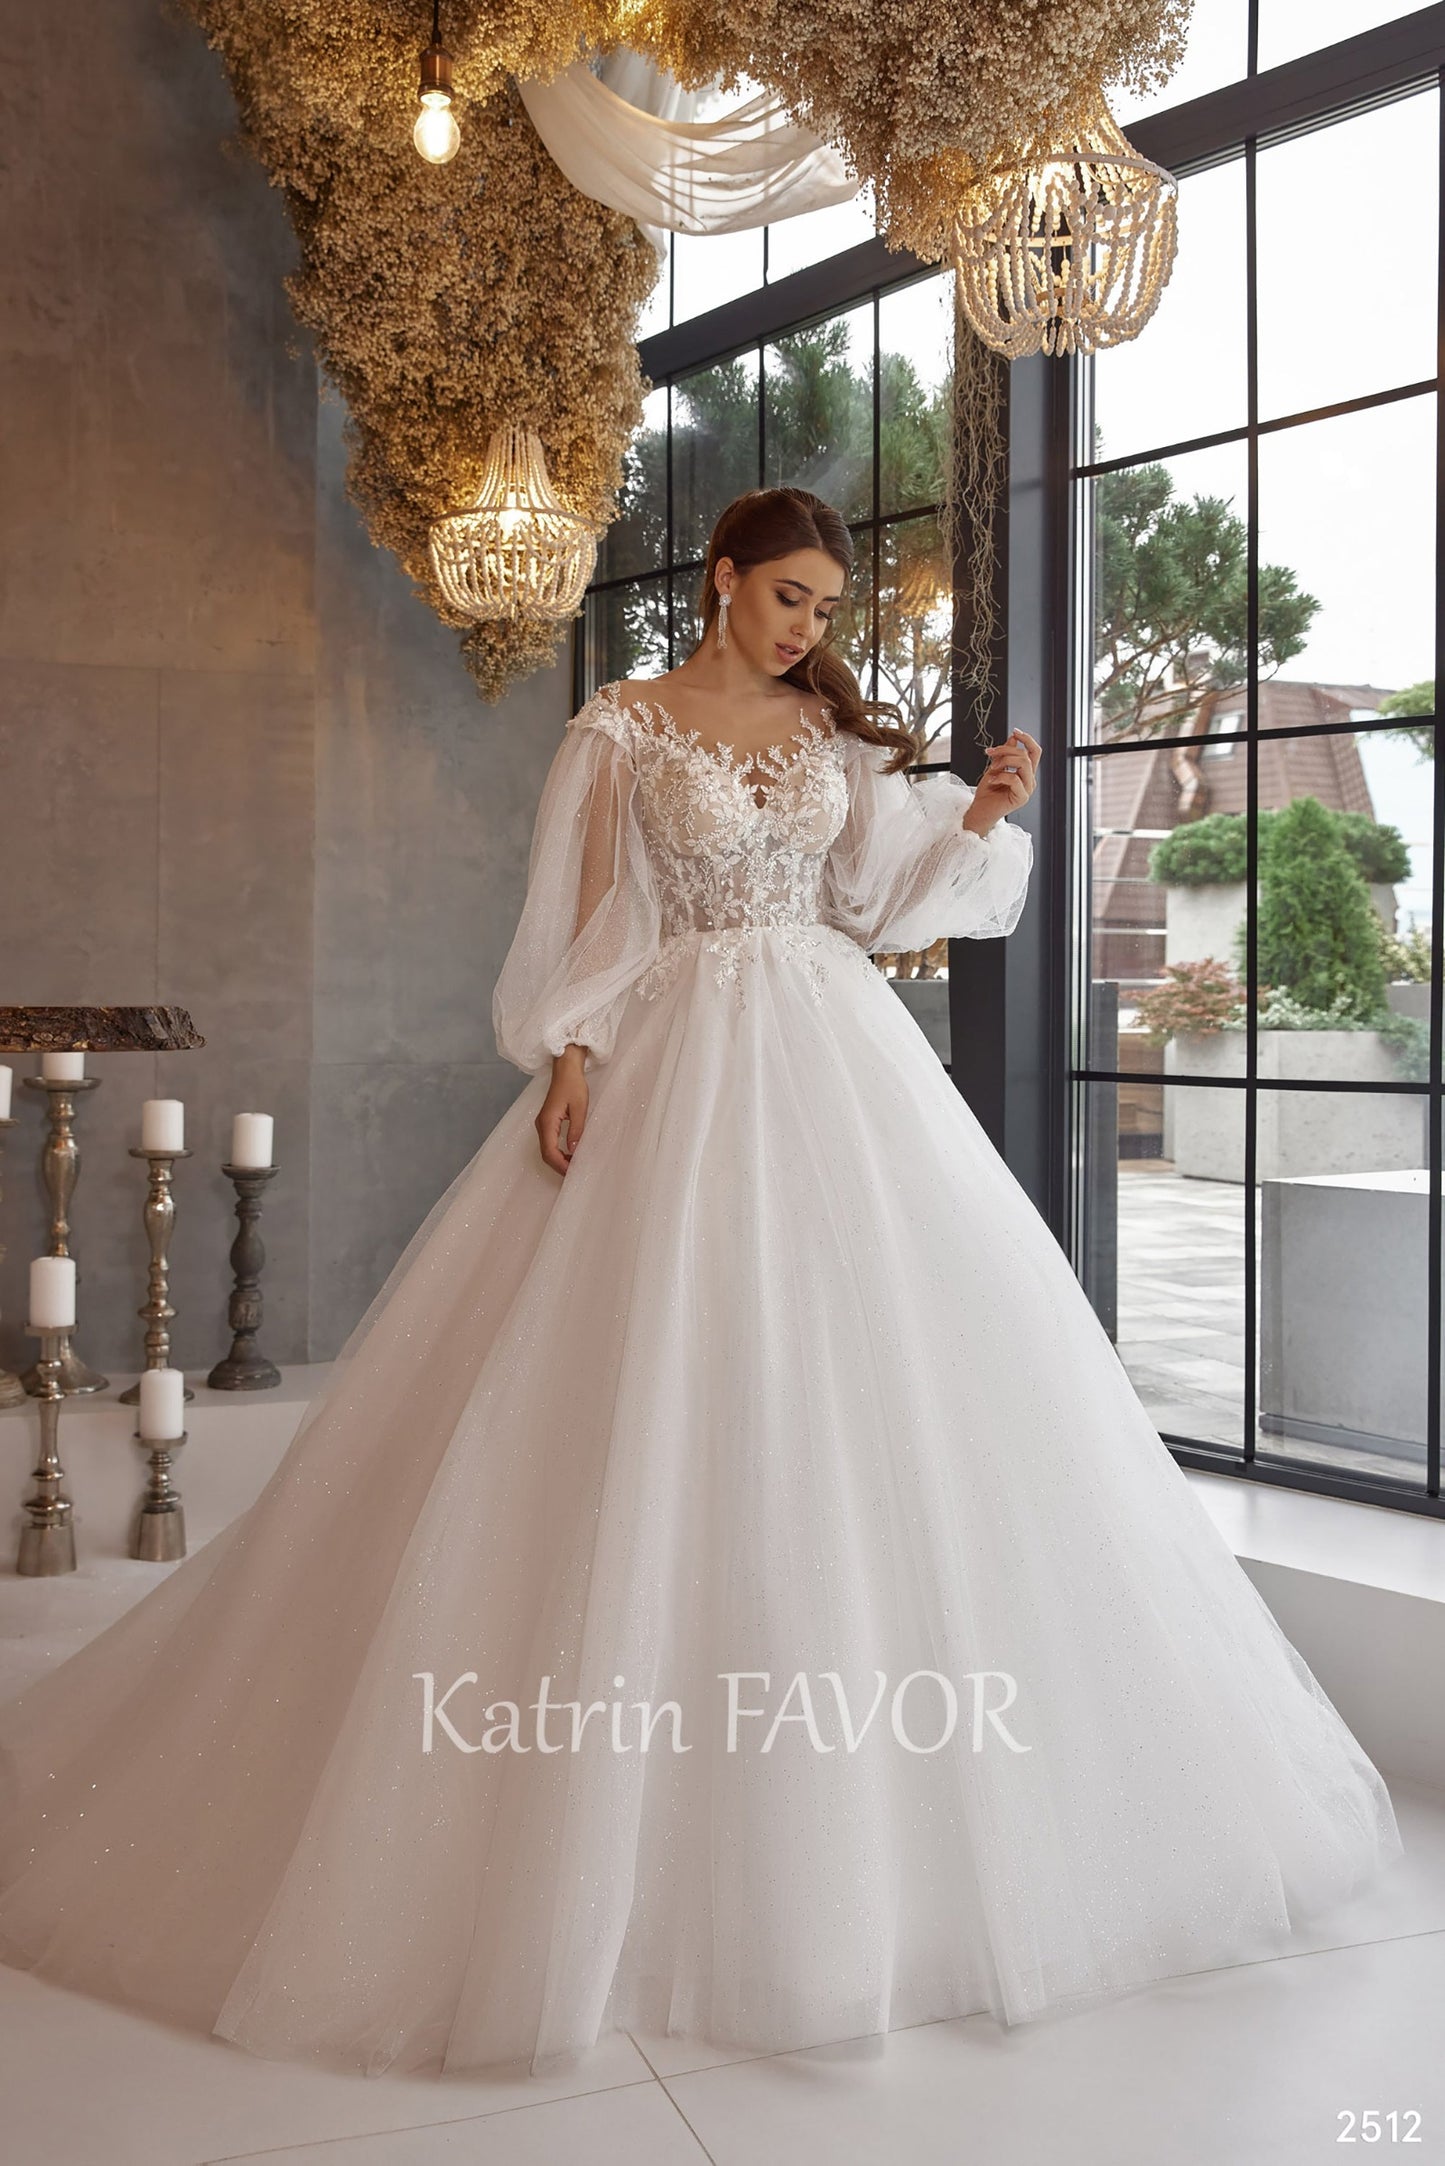 KatrinFAVORboutique-Fairy princess ball gown wedding dress